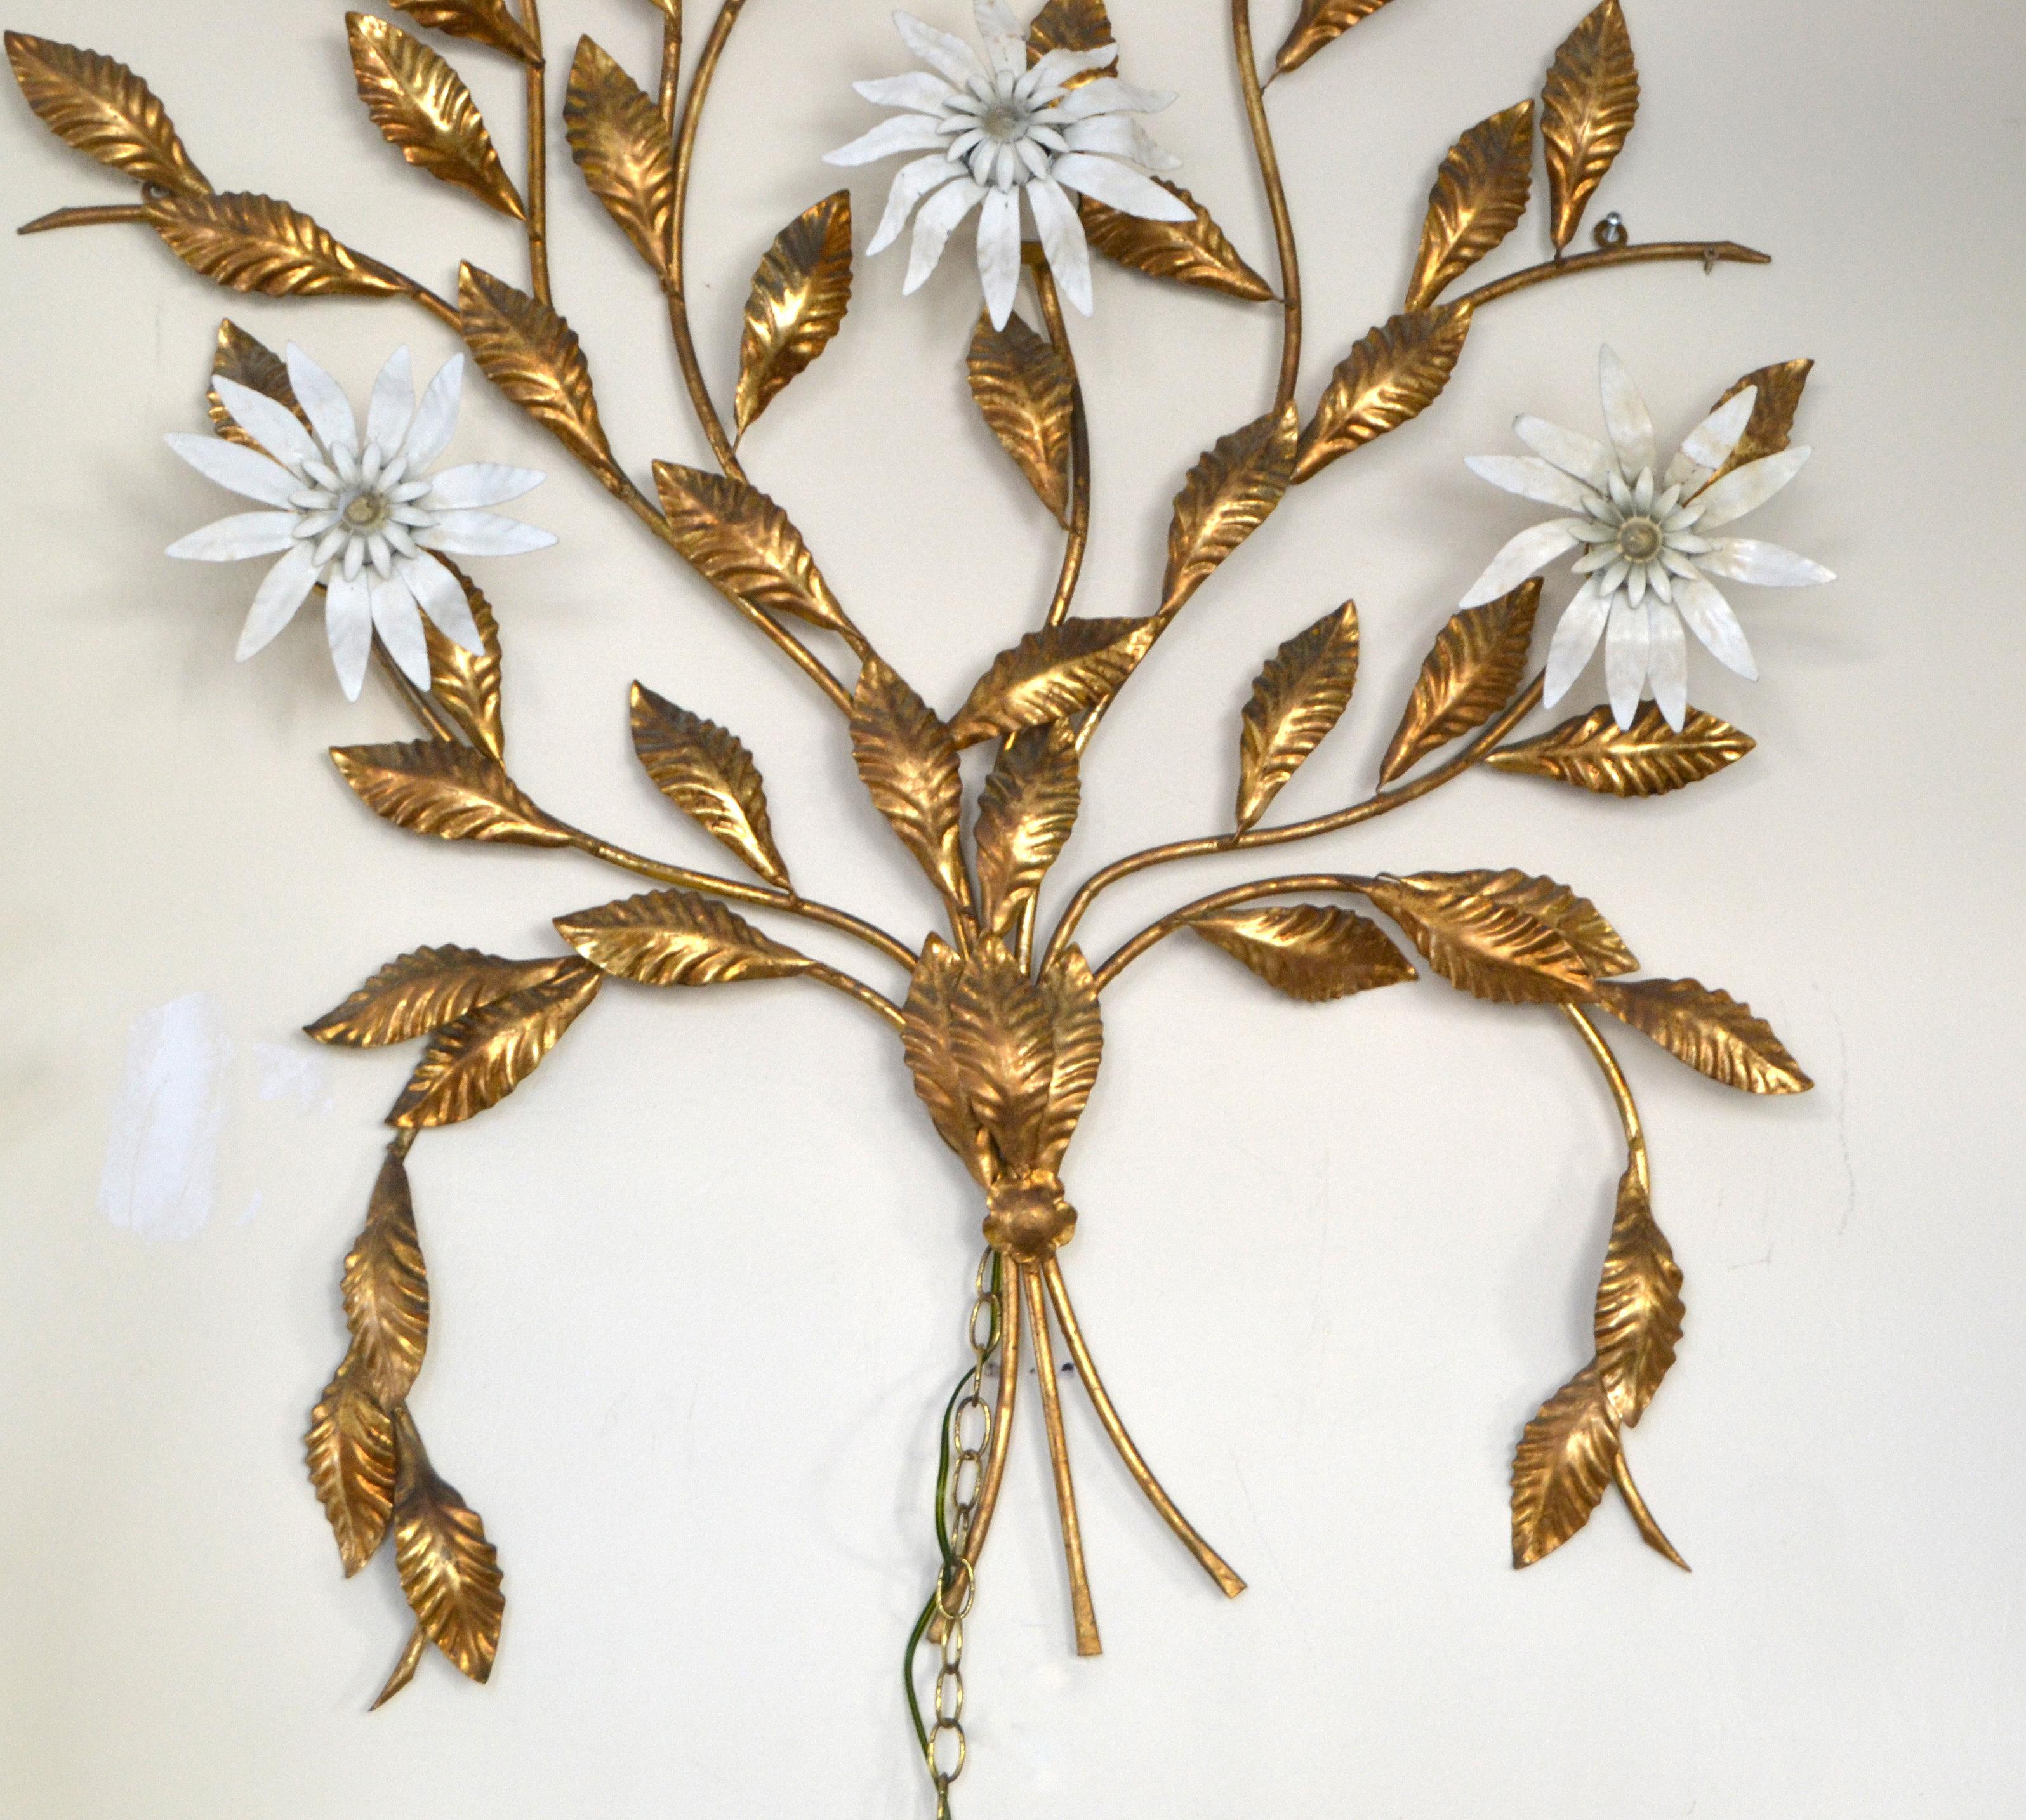 Vintage Golden Metal Tree Branch Wall Sculpture with 5 Flower Lights 5